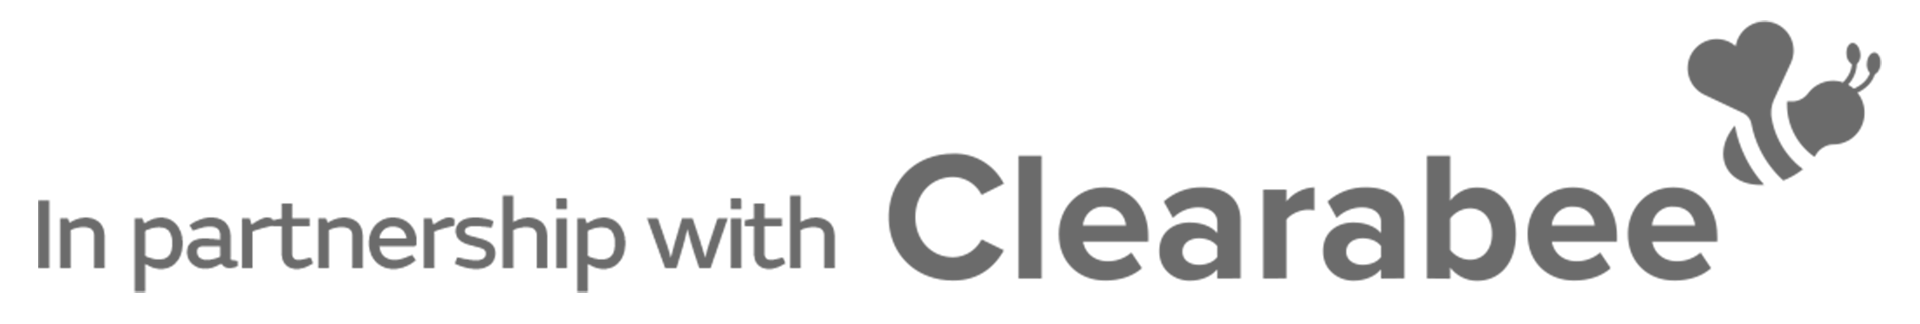 Clearabee Logo